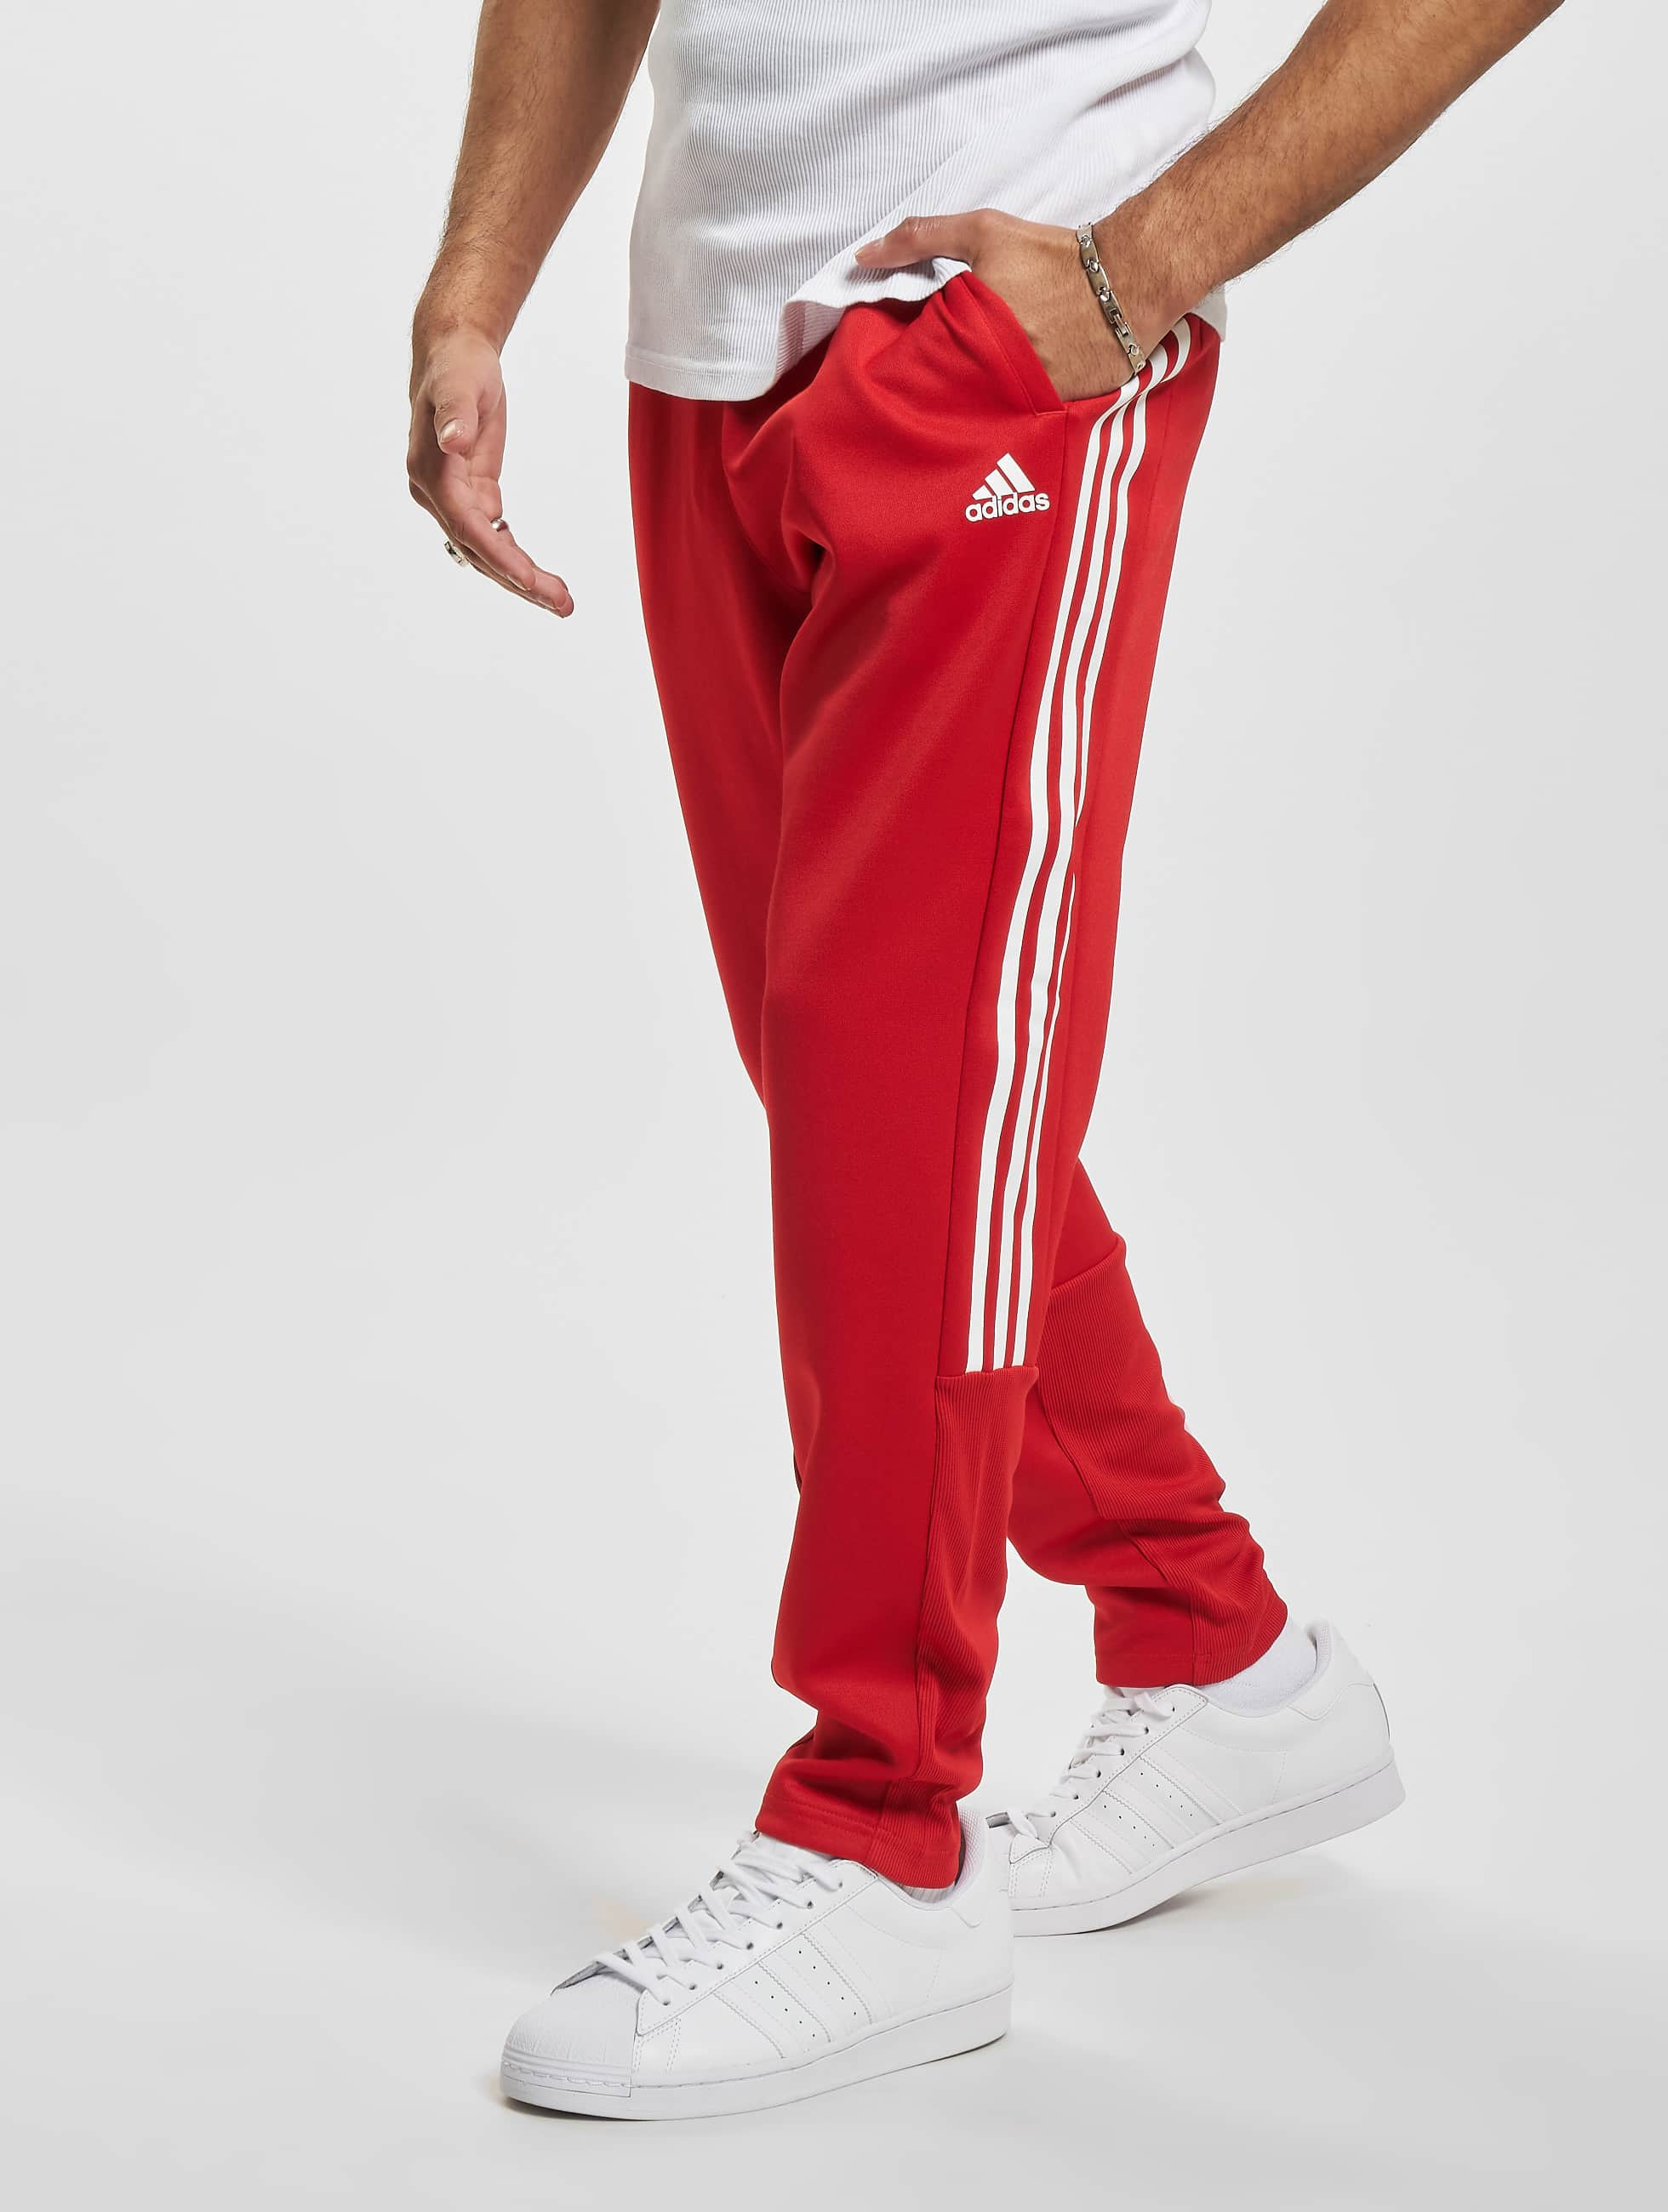 krysantemum Hysterisk legeplads adidas Originals Bukser / Joggingbukser Originals i rød 996124